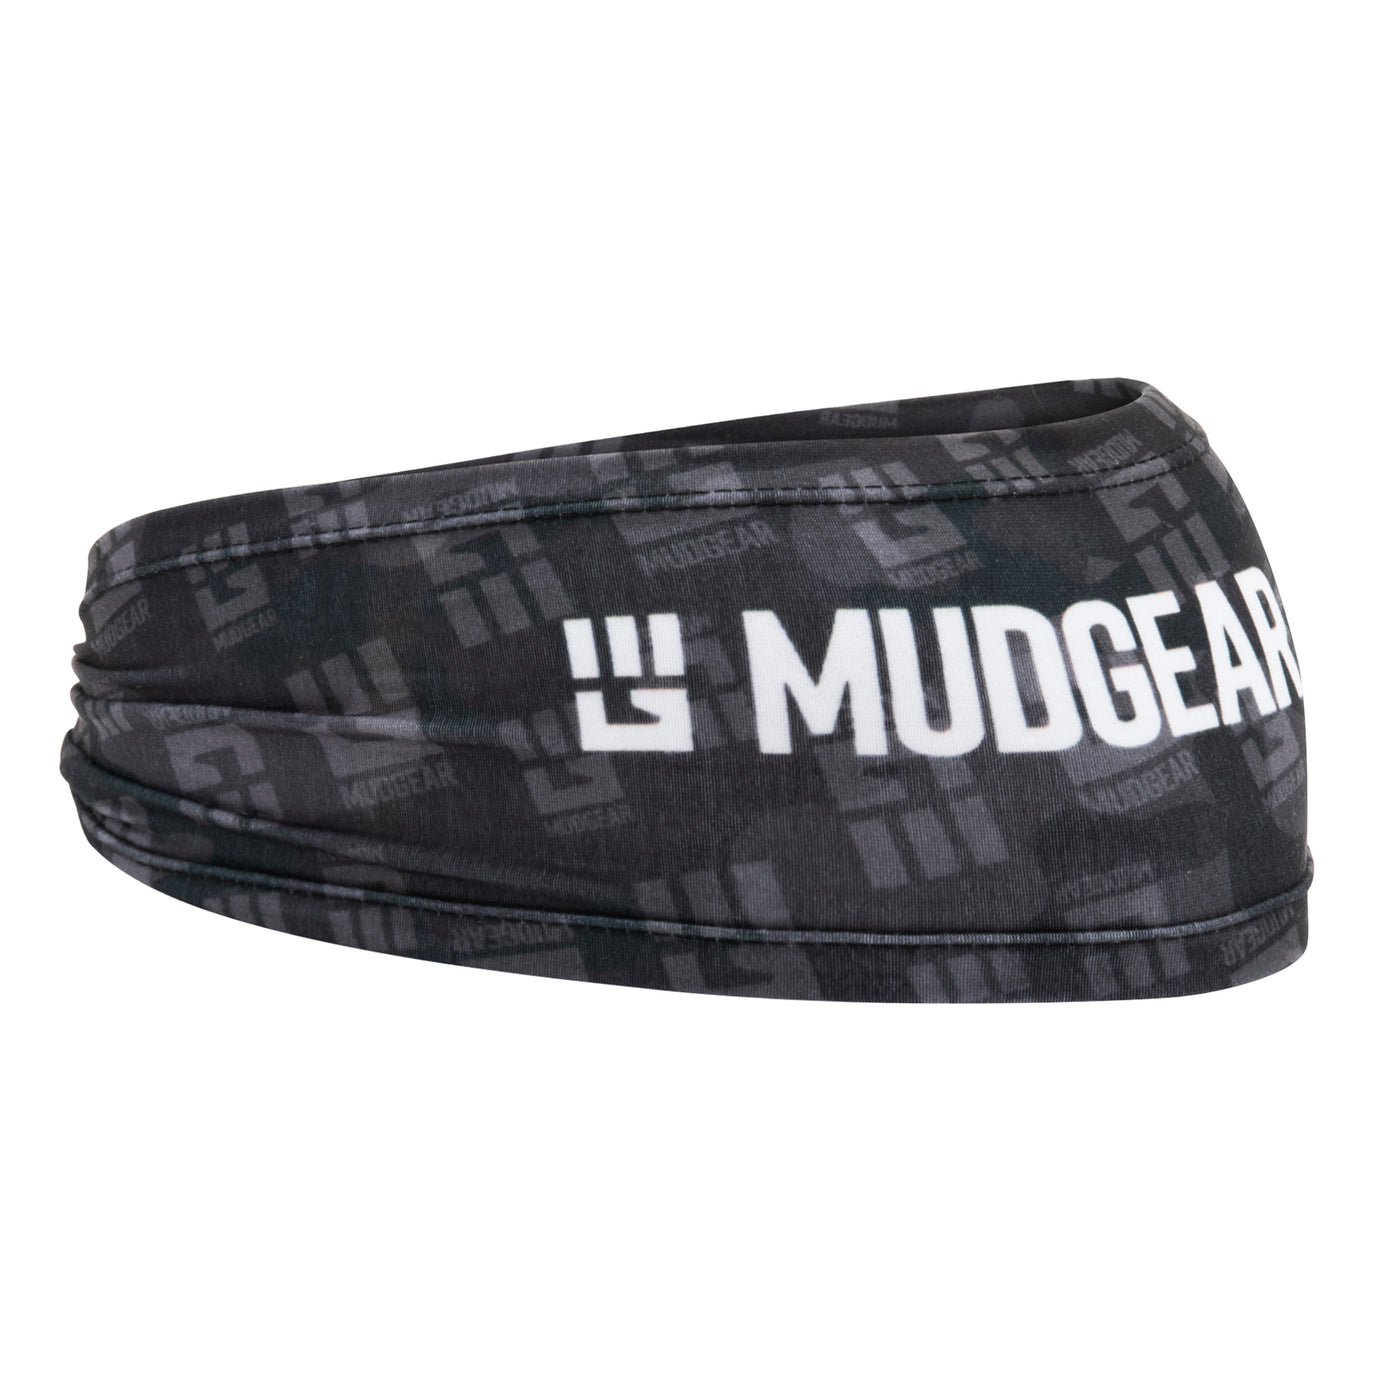 Comfortable Hoo-Rag Head Band by Mudgear